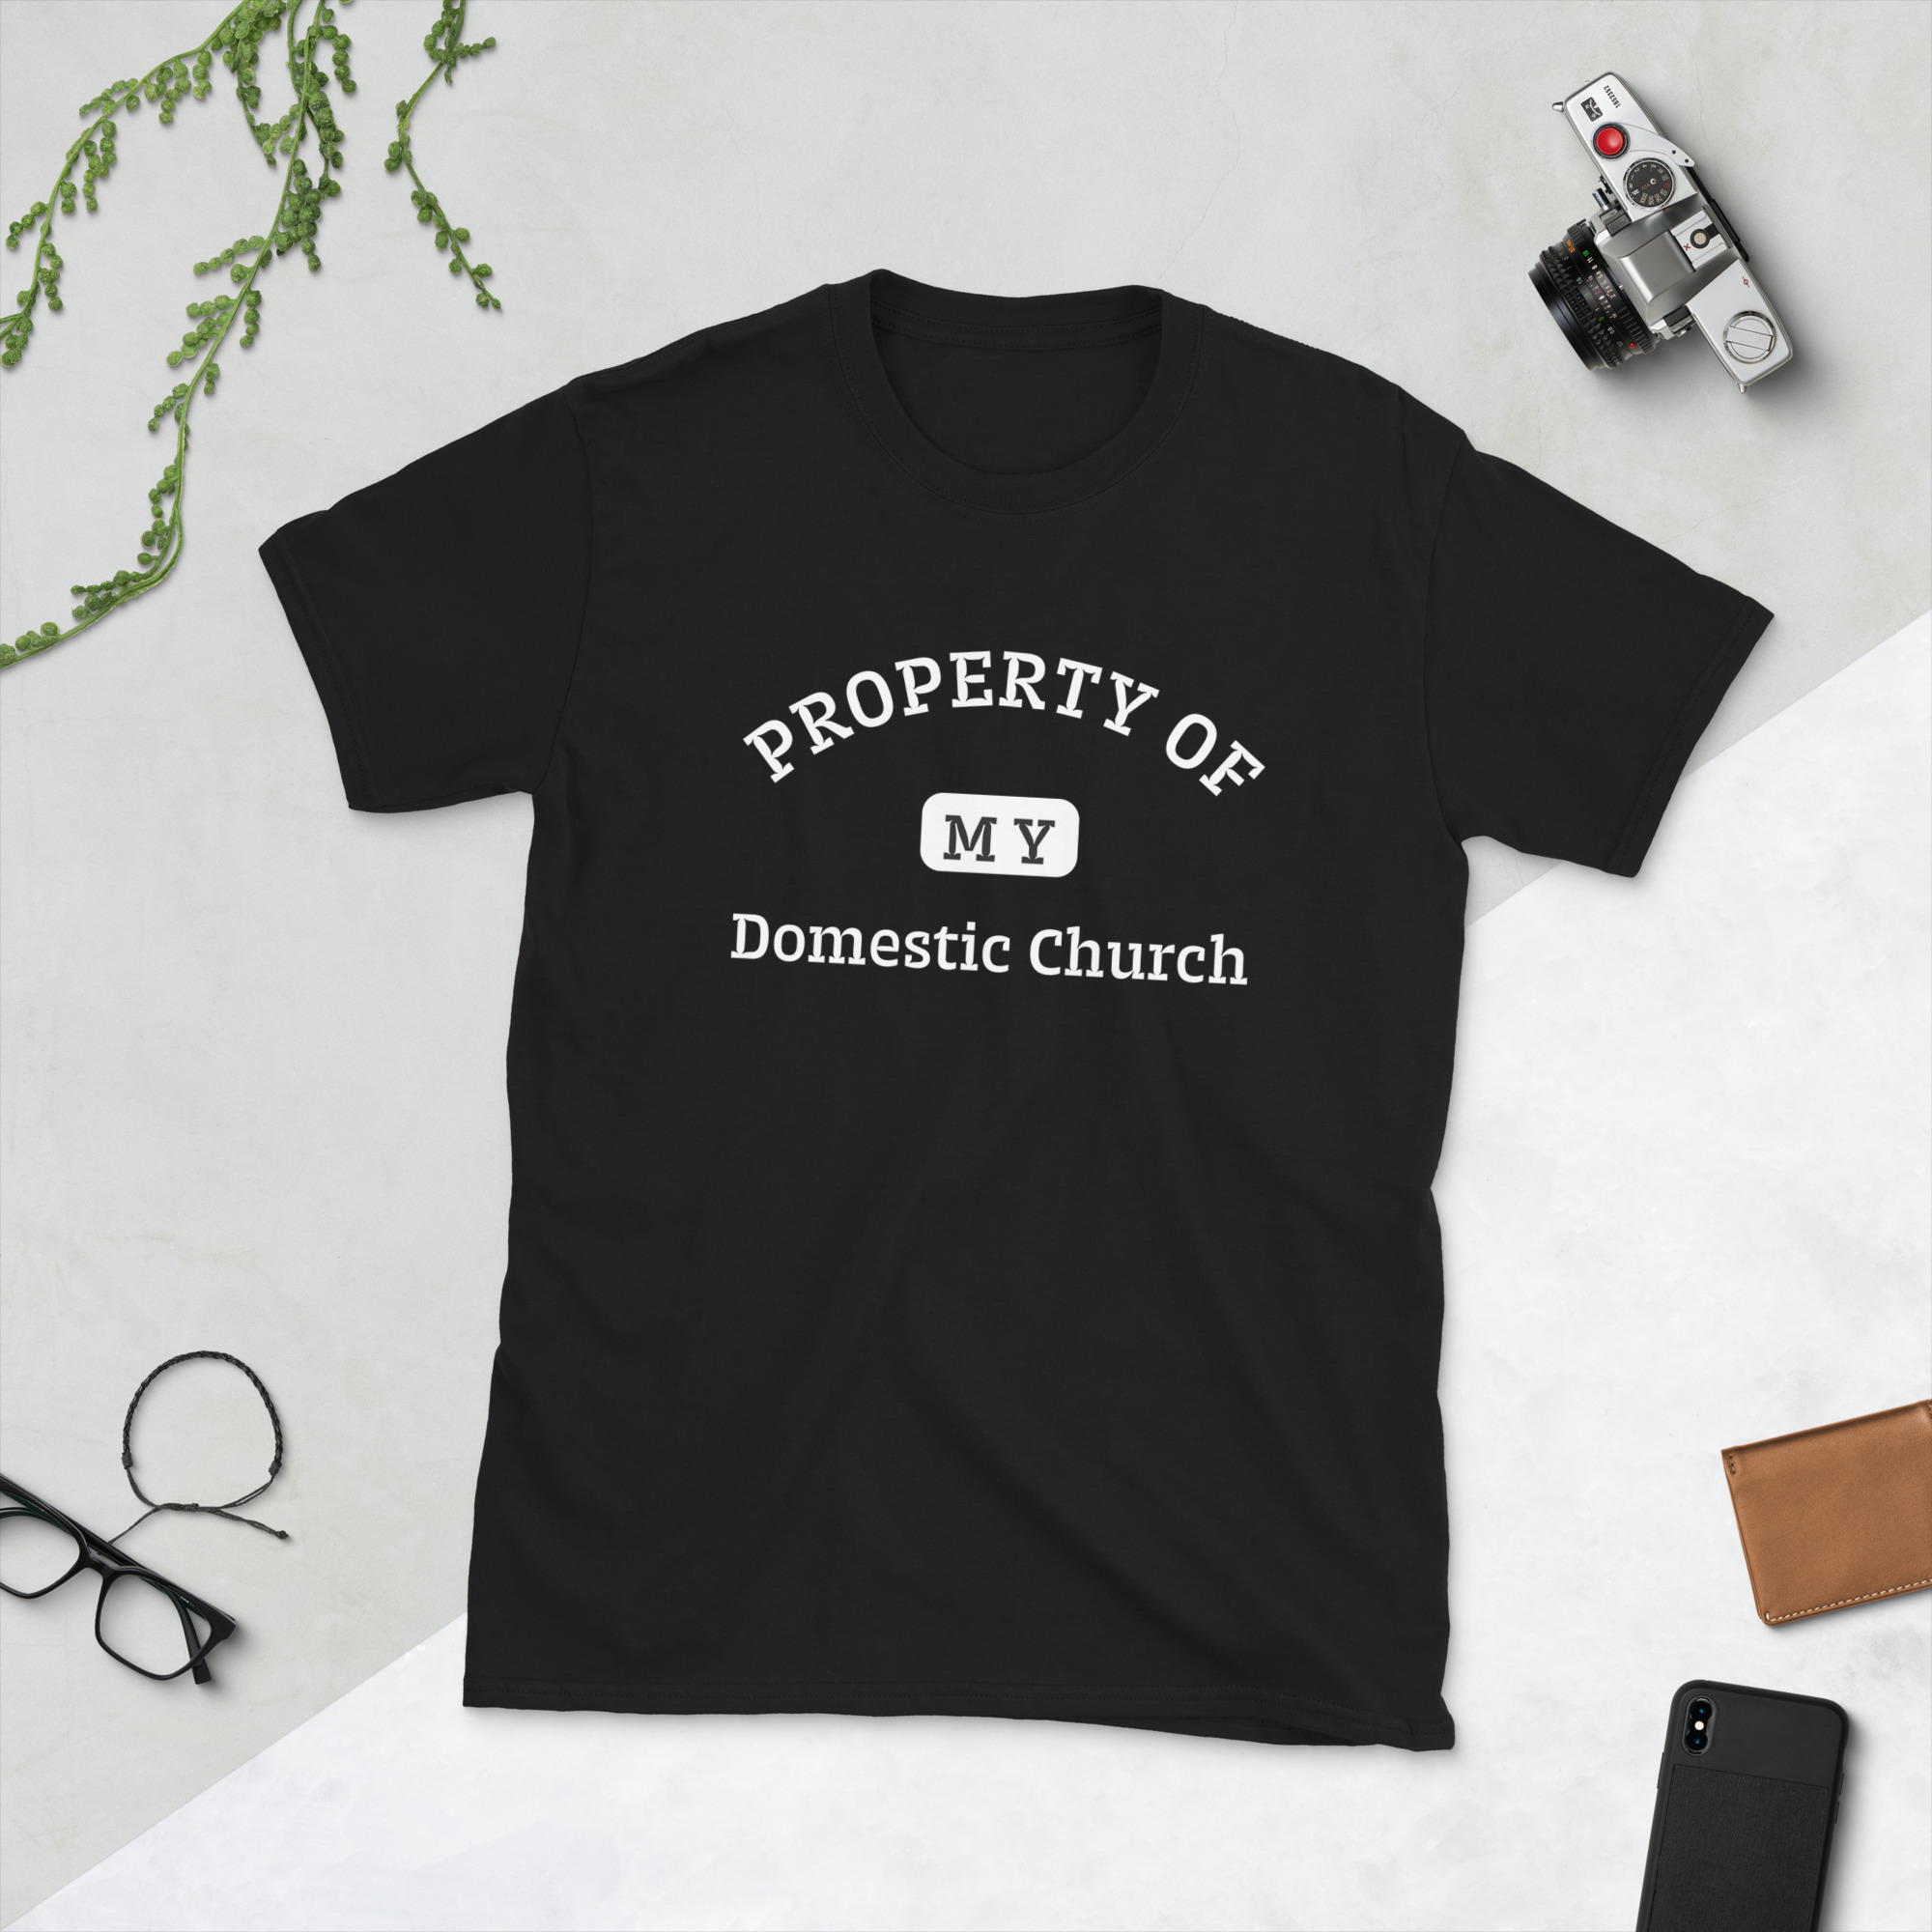 Property of My Domestic Church - Short-Sleeve Unisex T-Shirt